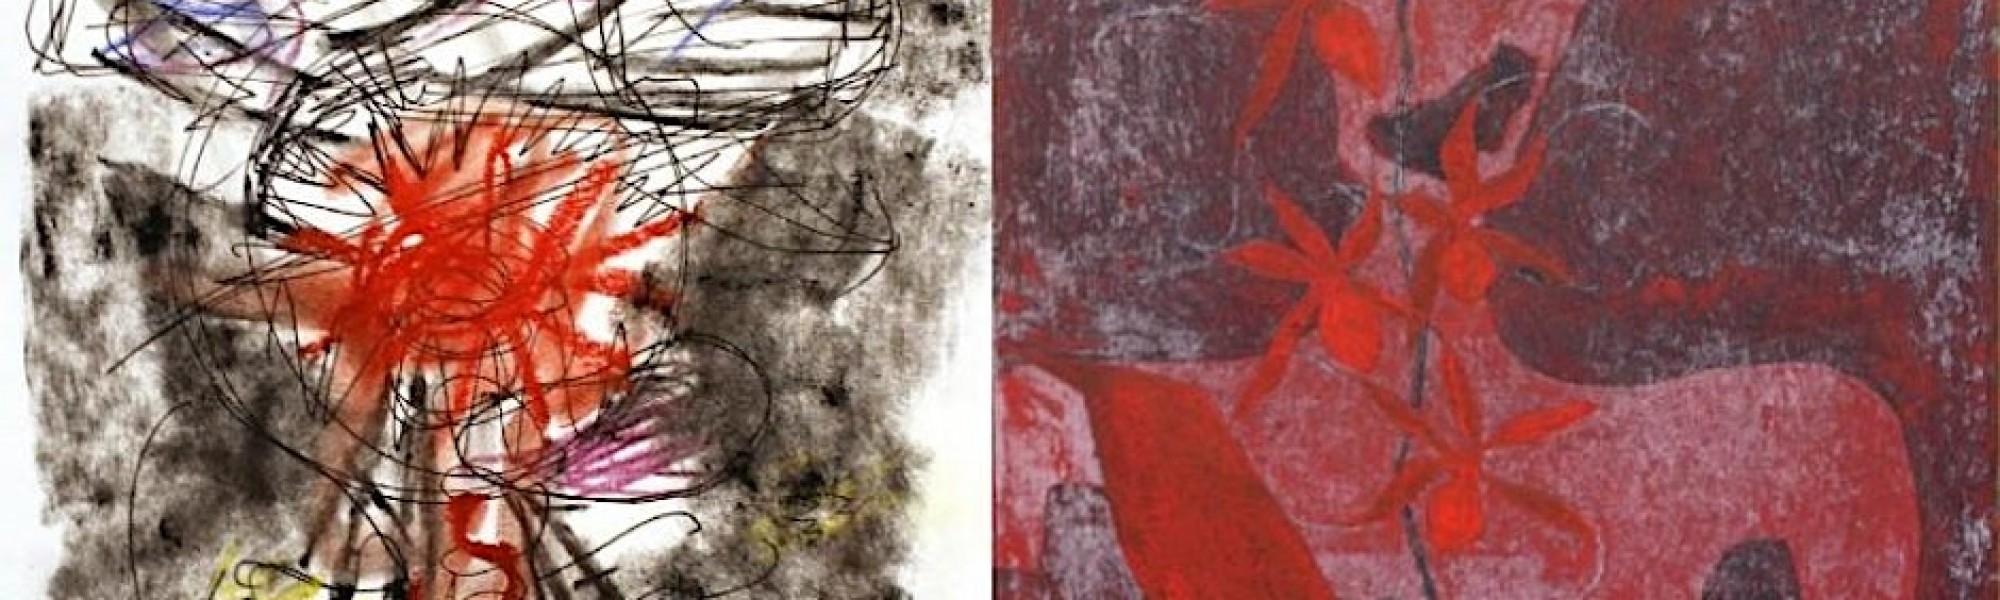 Two artworks about endometriosis